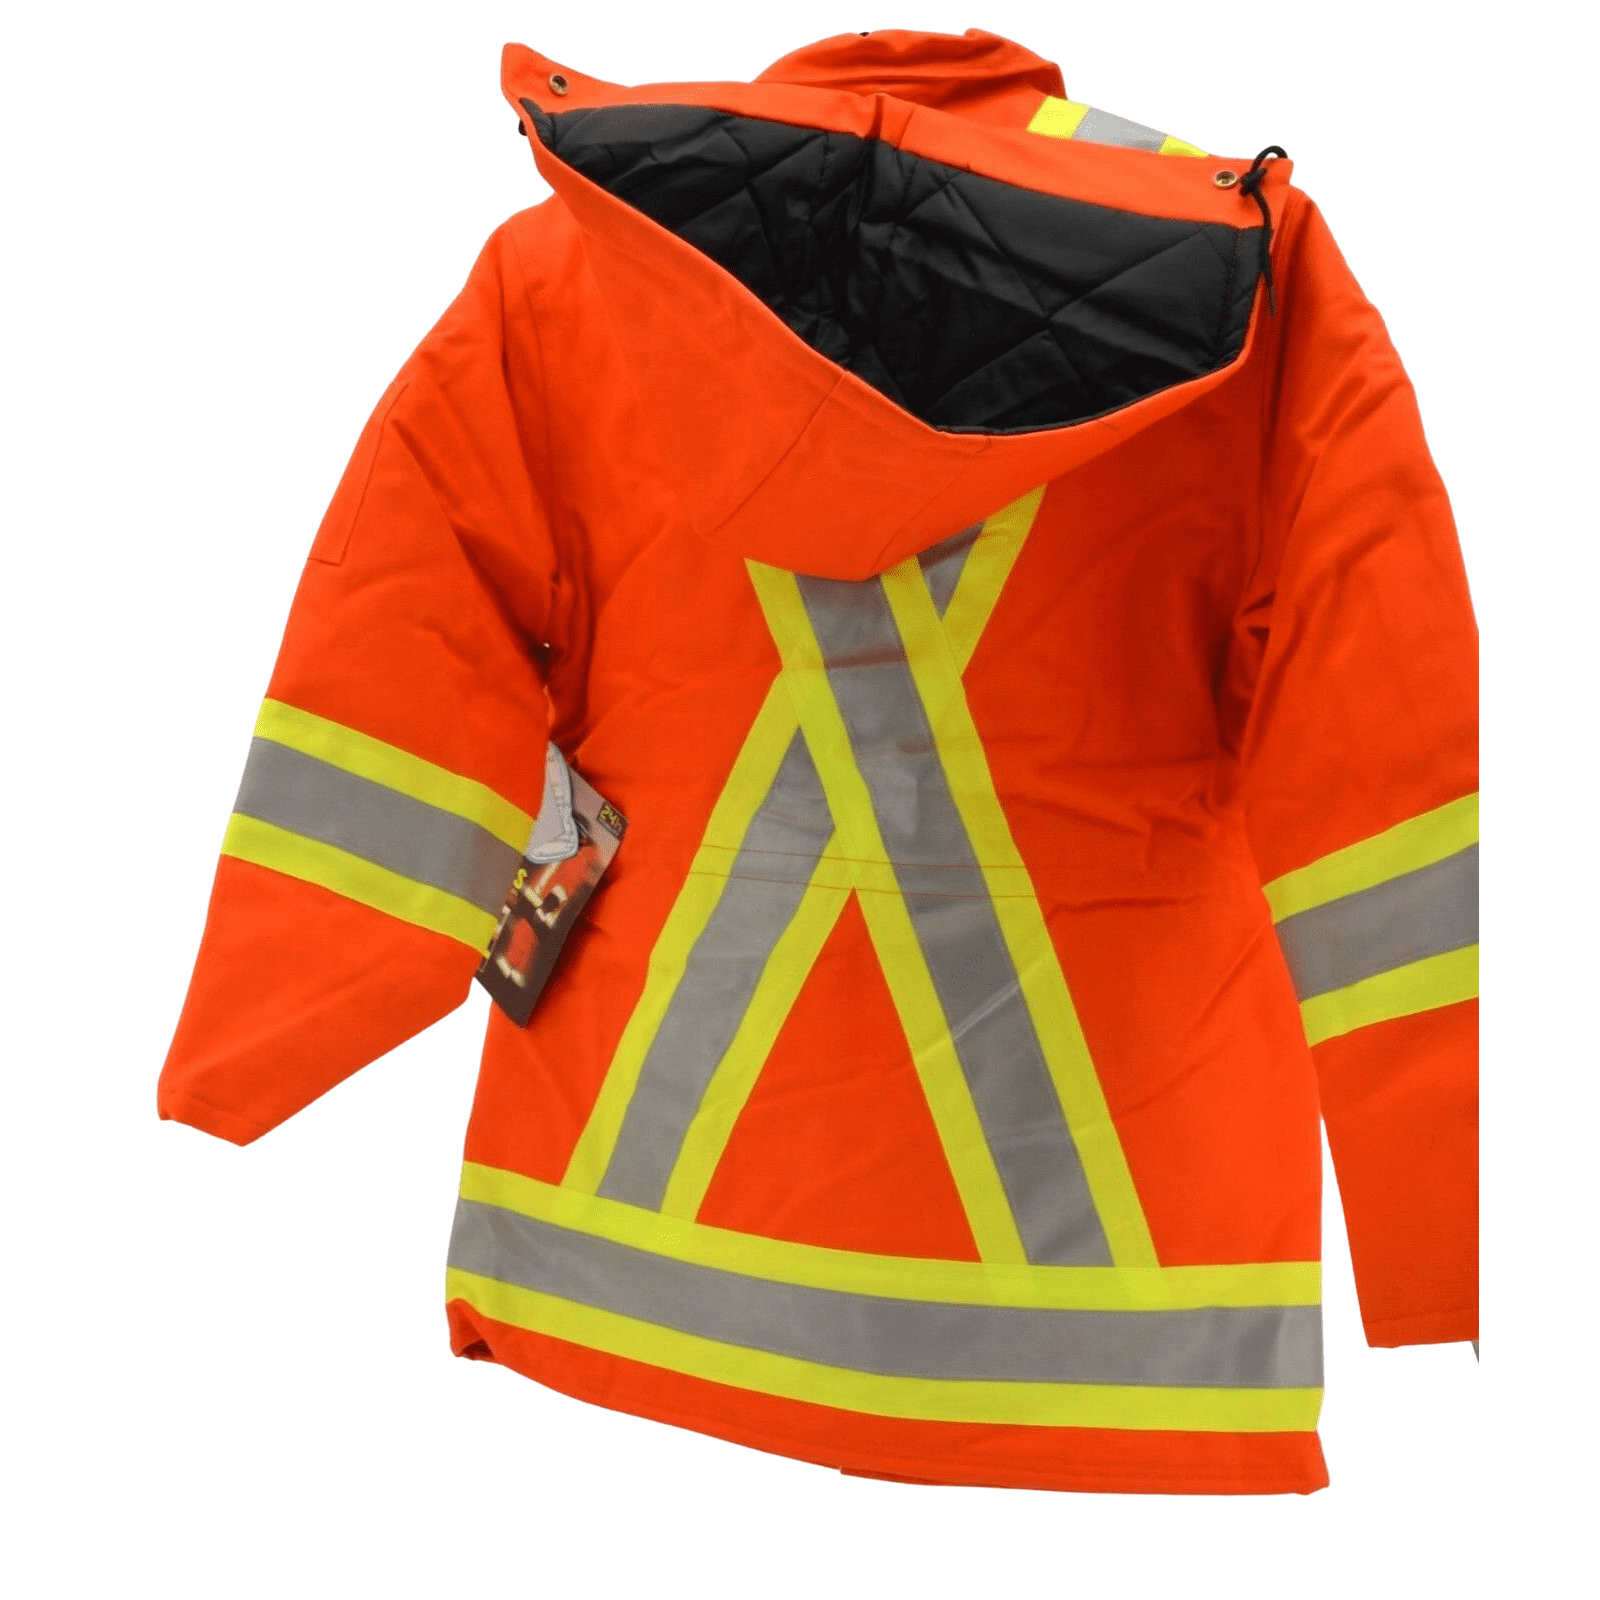 Tough Duck men's work jacket High Vision Orange with Sasfety Stripes in size medium